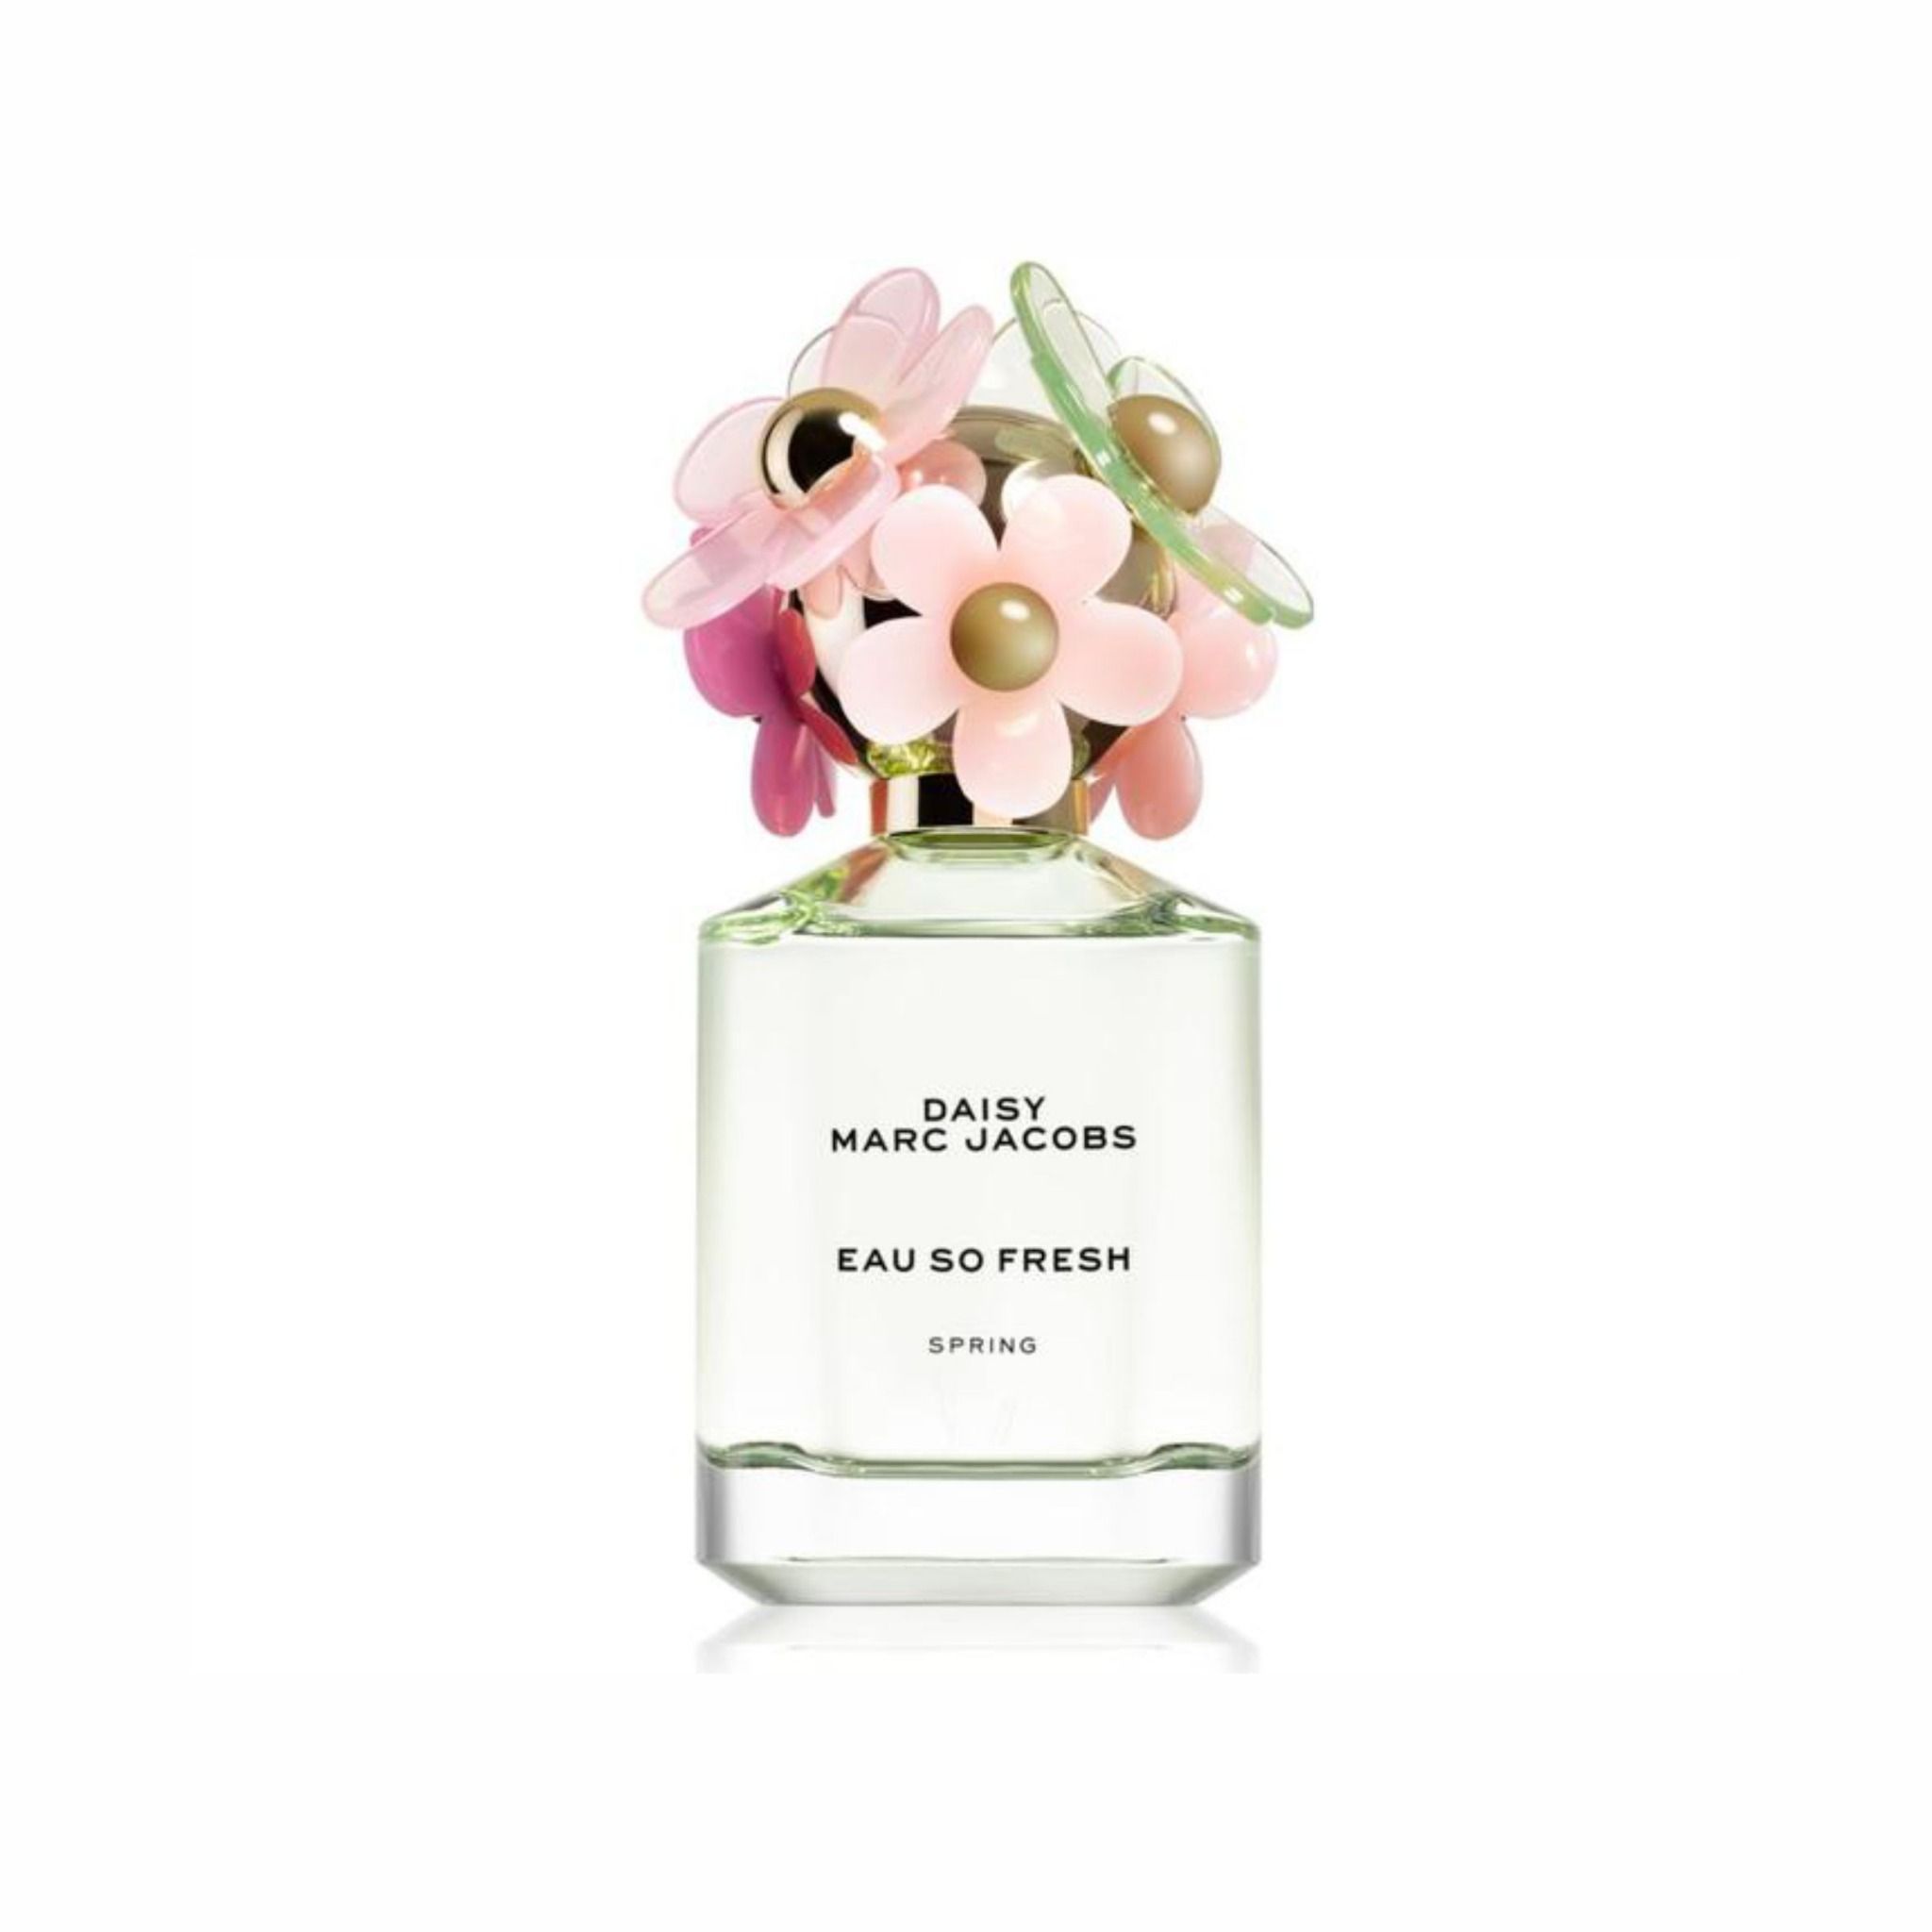  Marc Jacobs Daisy Eau So Fresh Spring Limited Edition 